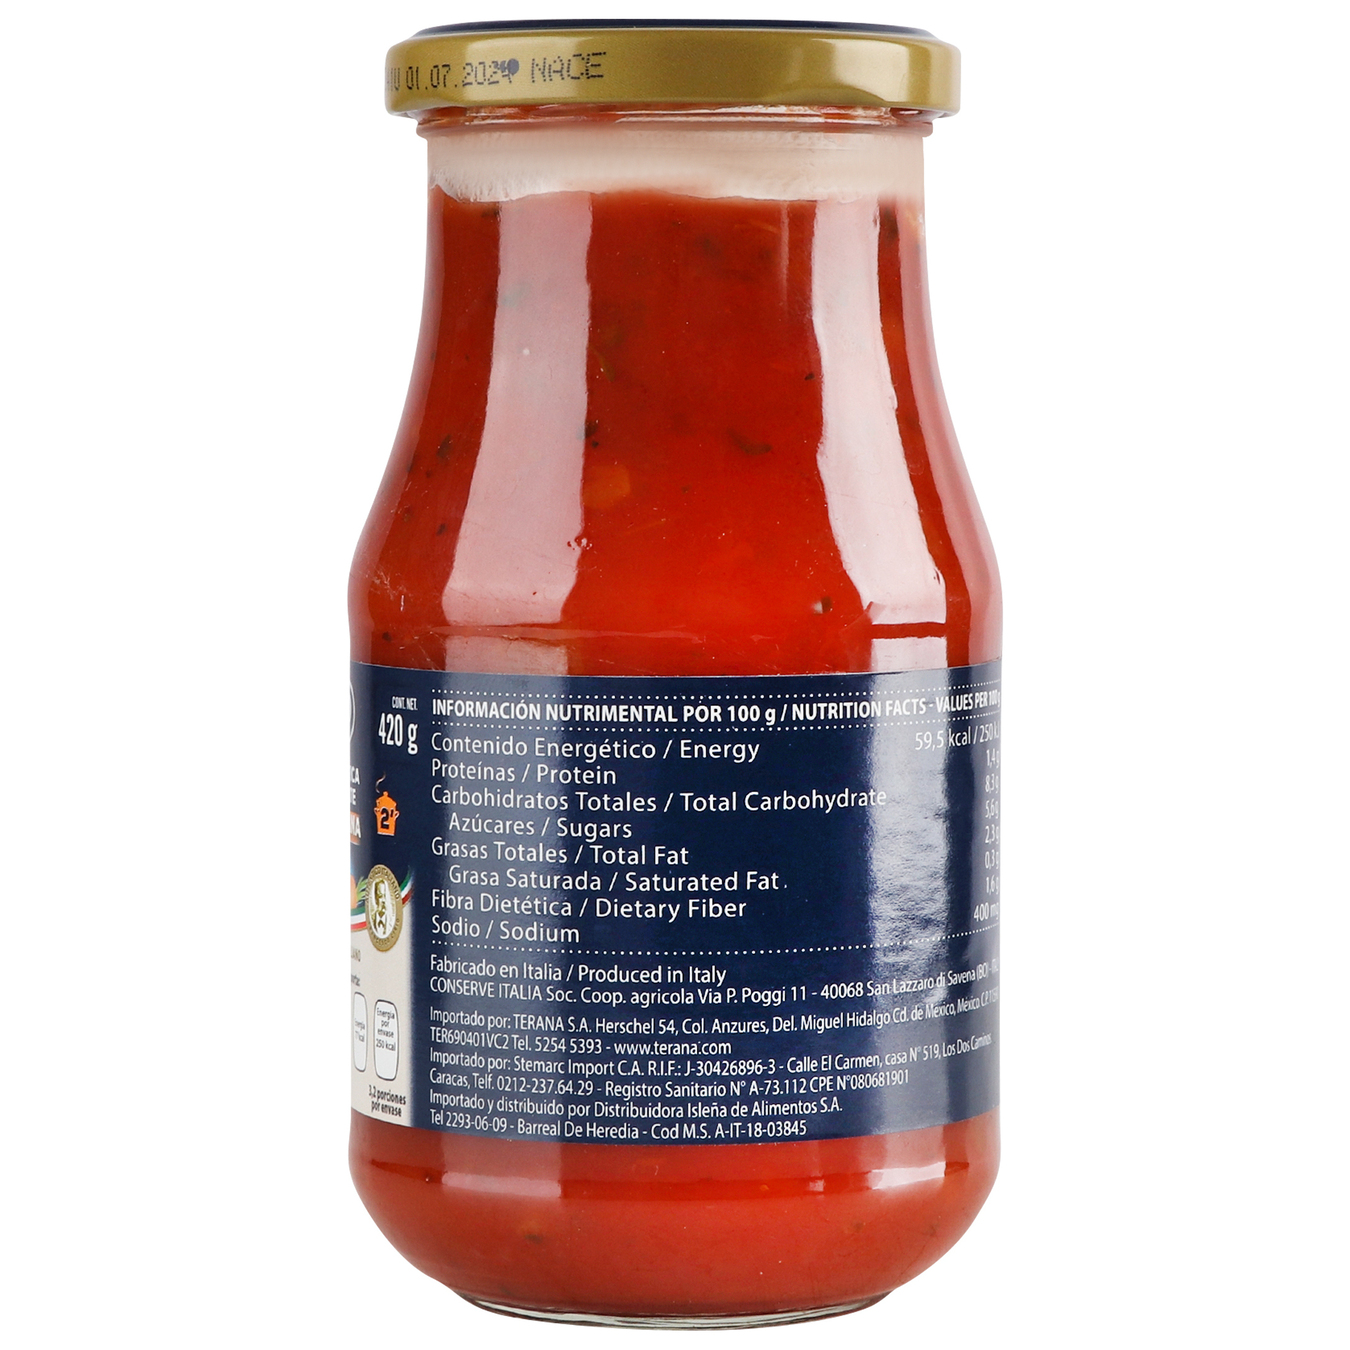 Cirio Napoletana tomato sauce 420g 3